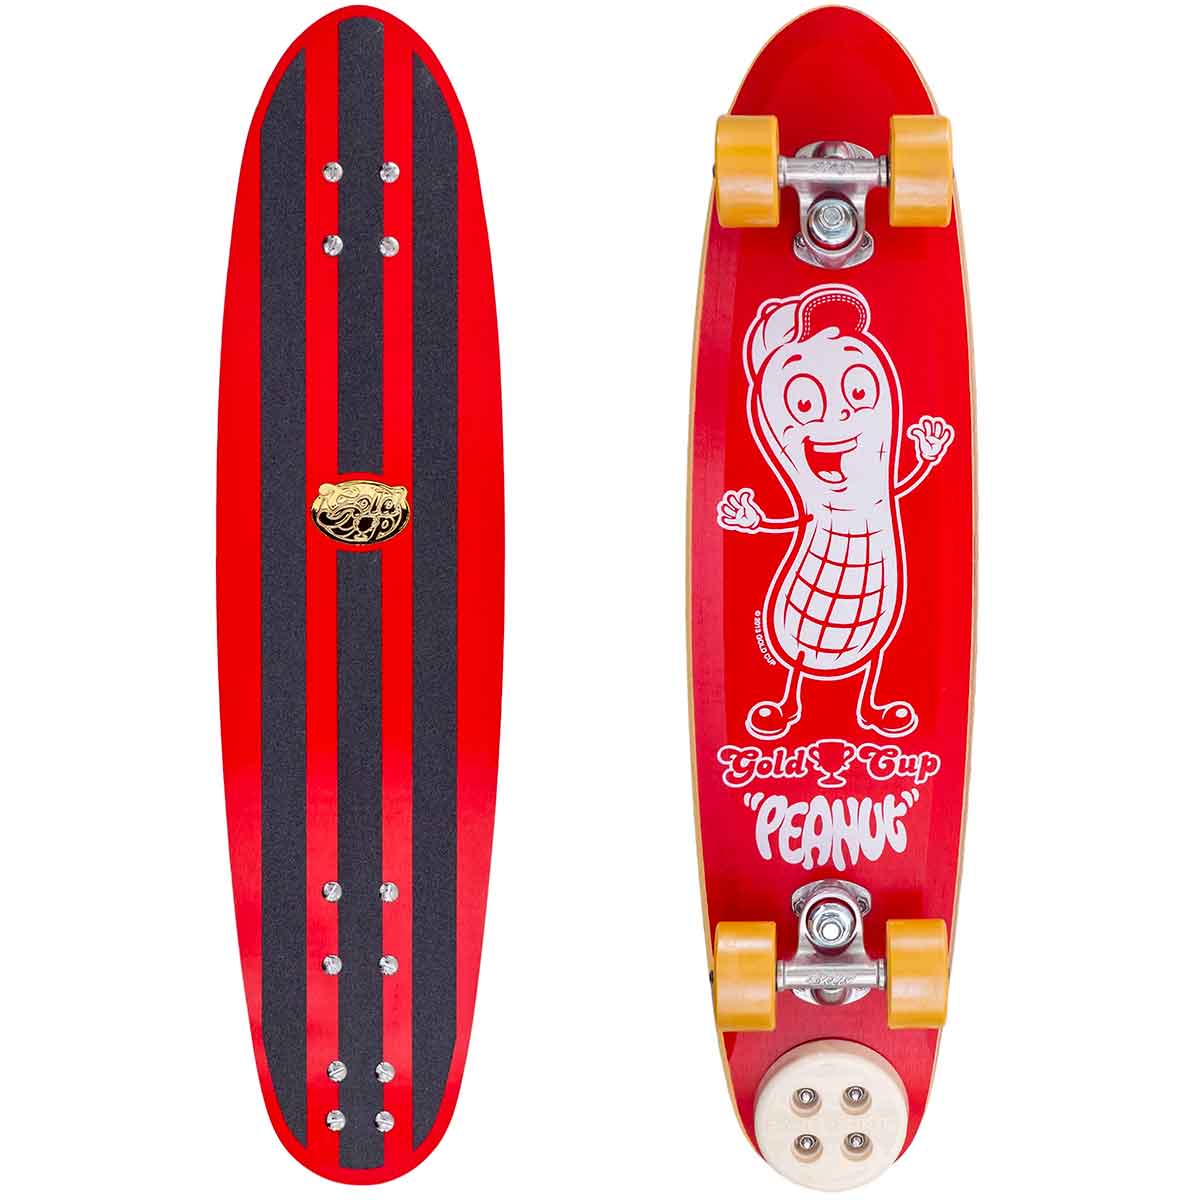 Gold Cup Peanut Cruiser Skateboard - Red 6.75X25.825 | Skateshop